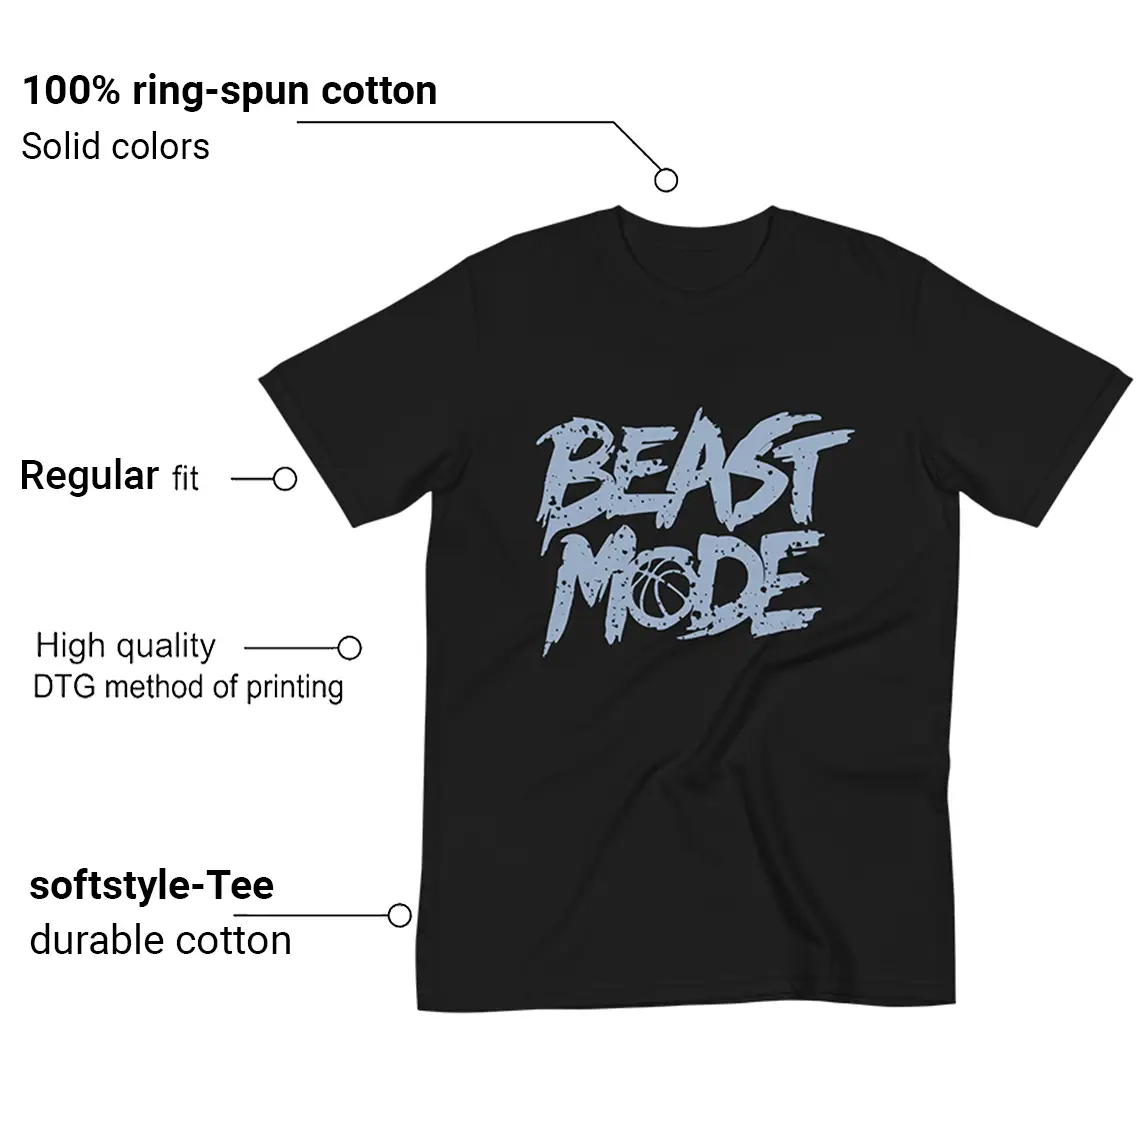 Beast Mode Shirt For Jordan 7 Chambray Features